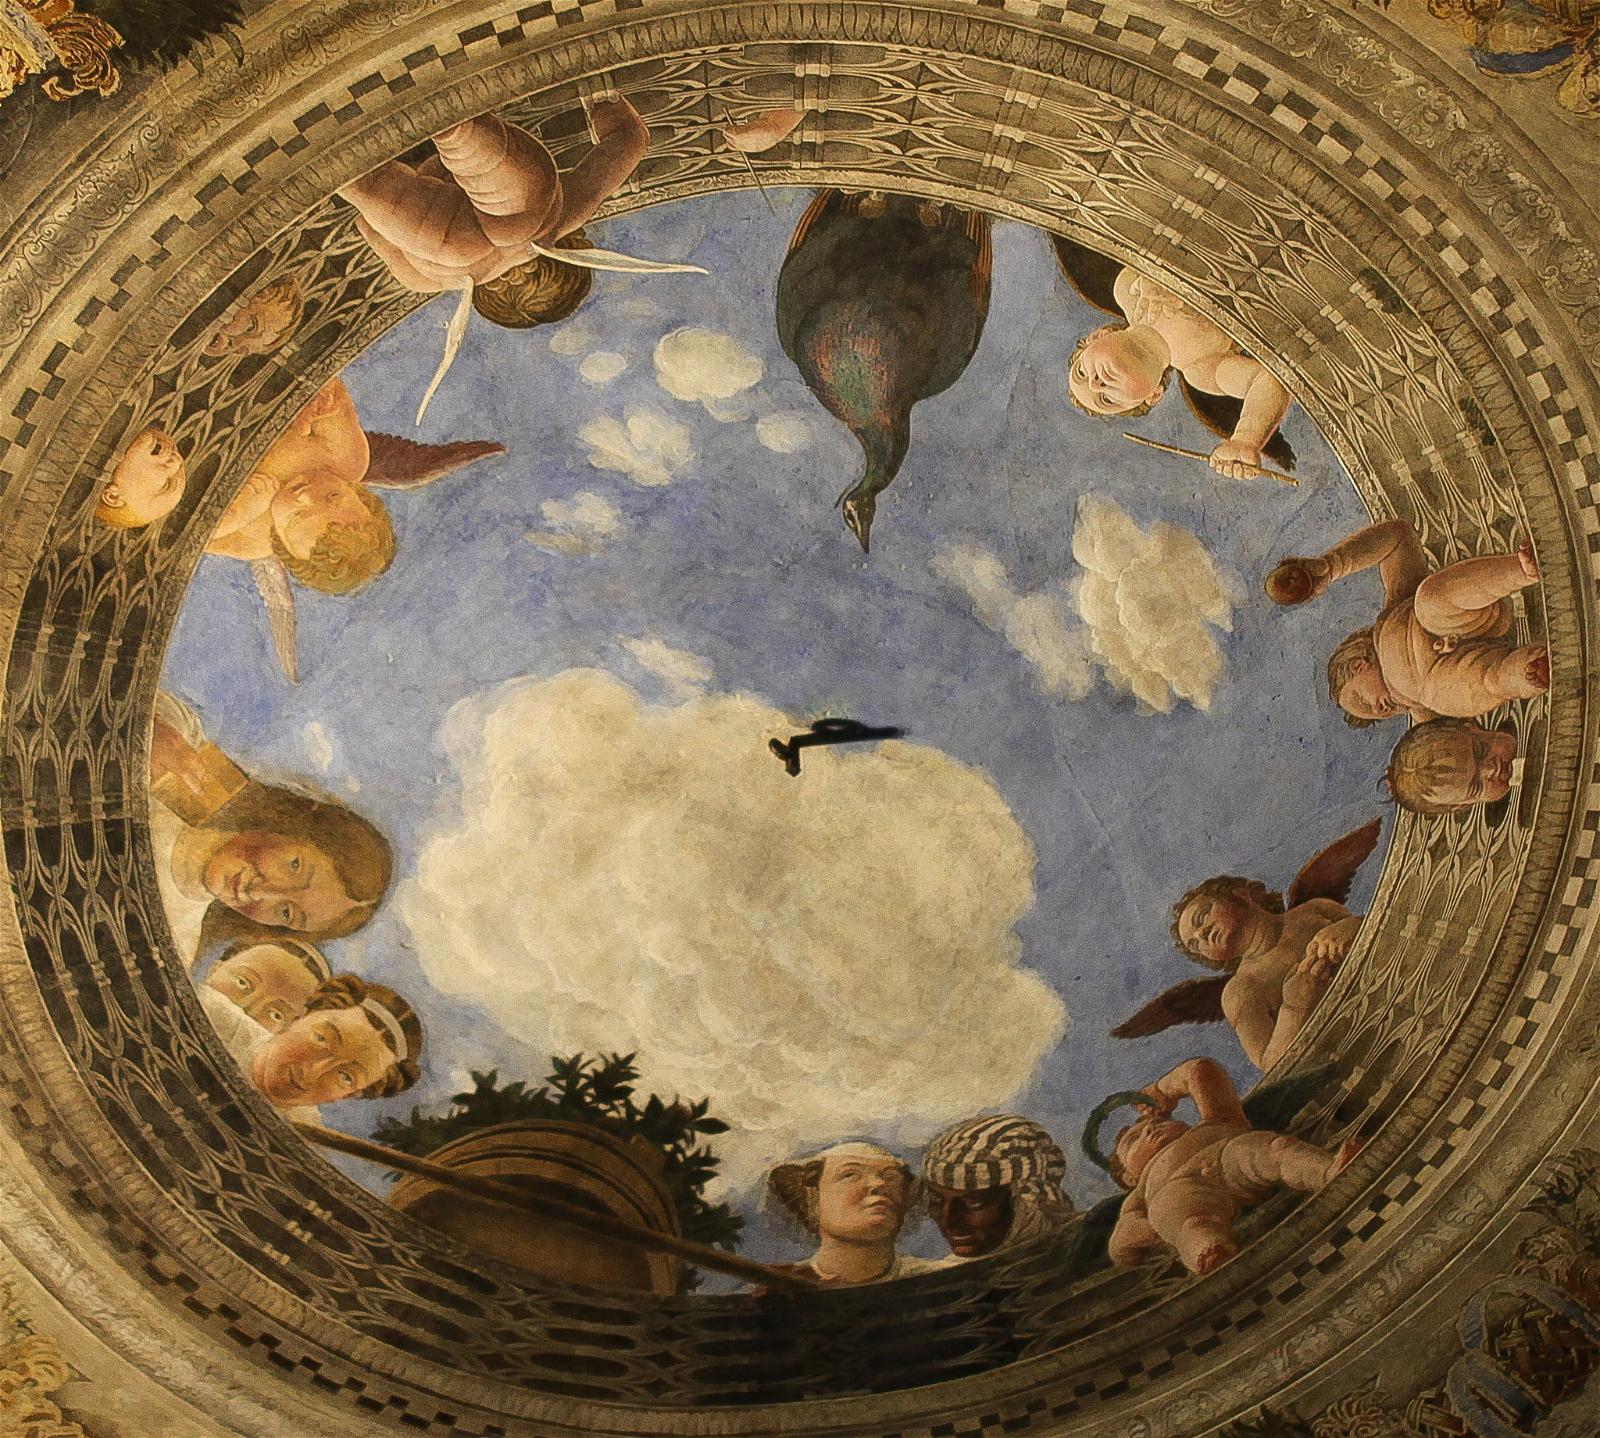 Image de Castello di San Giorgio. italy castle painting italia mantova castello mantua mantegna lombardy andreamantegna castellodisangiorgio ceilingpainting